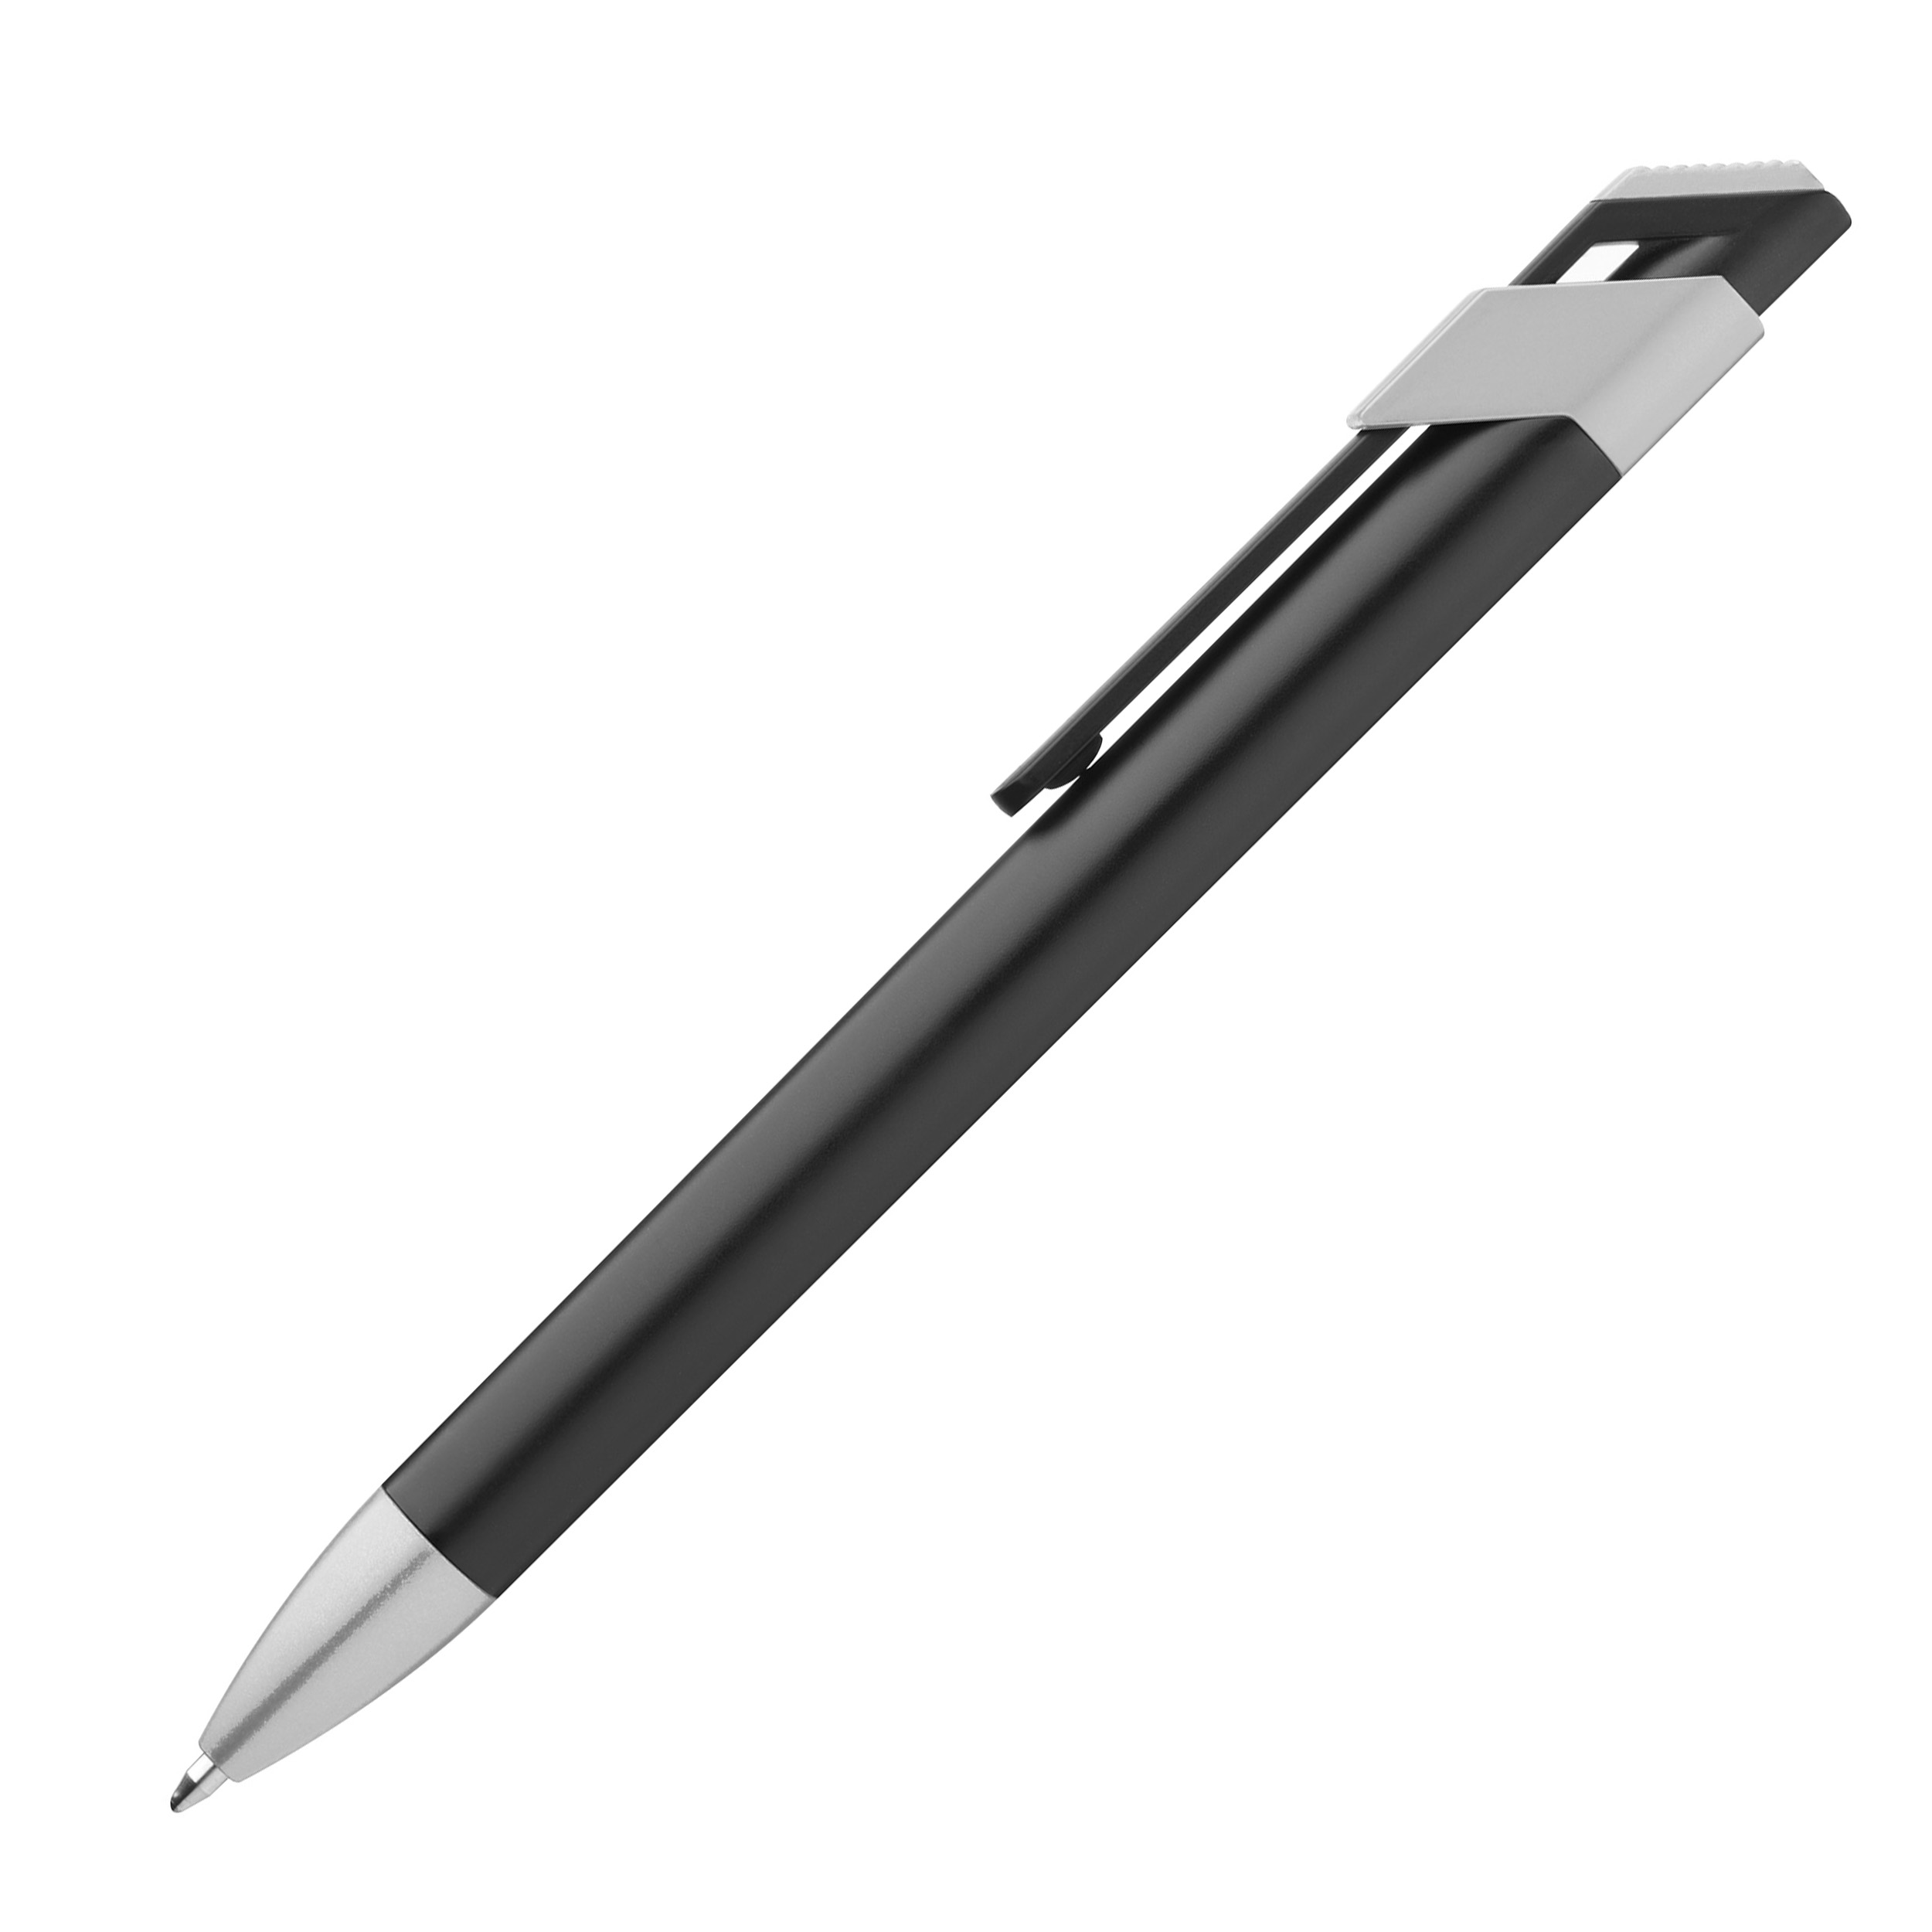 Black ball pen